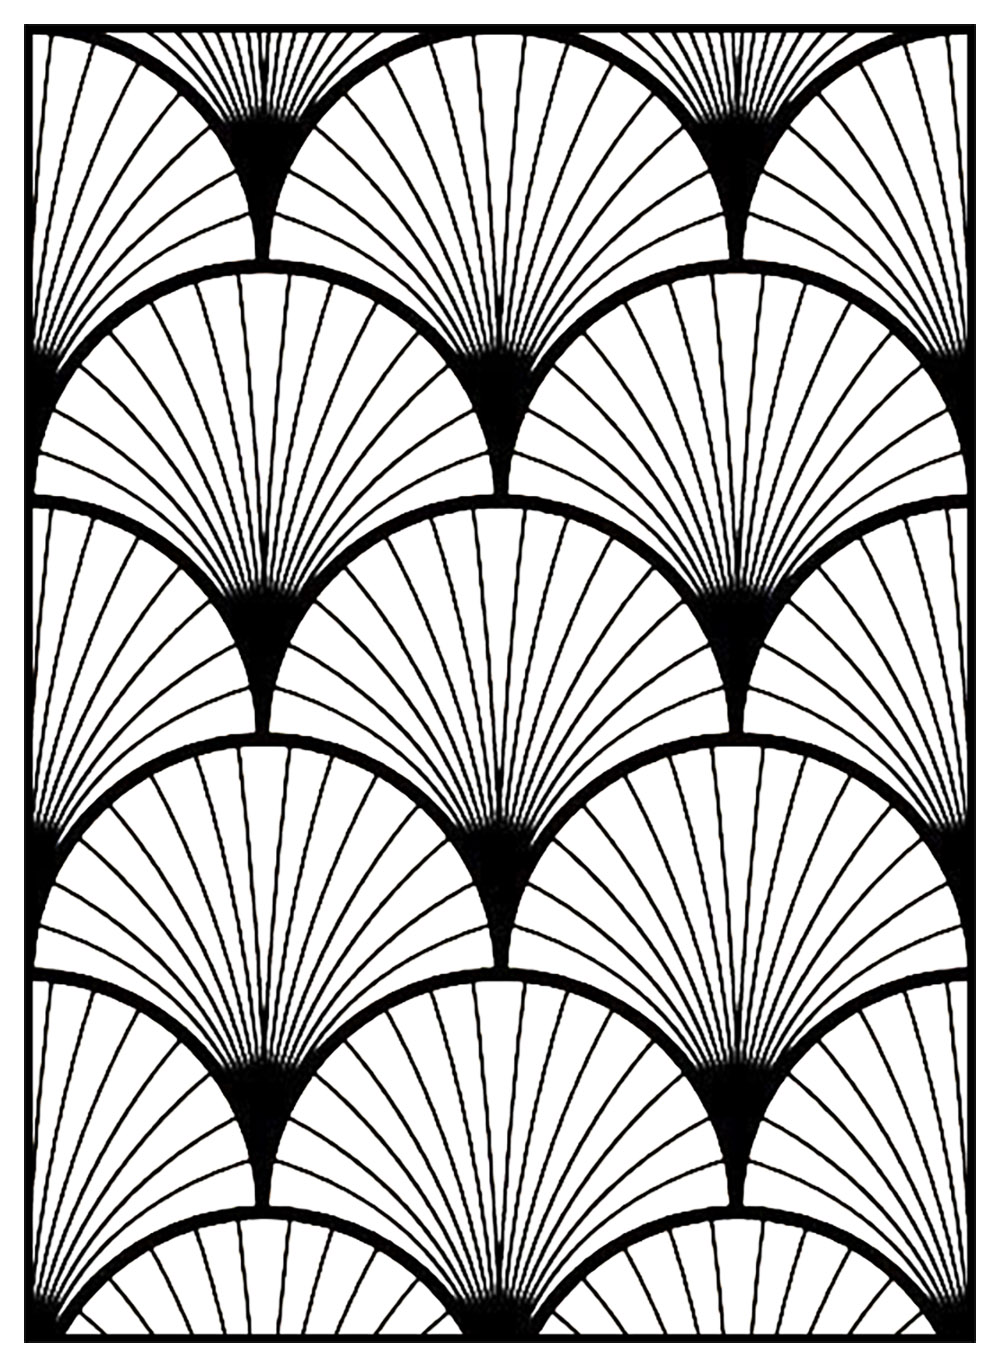 aluminium Metropolitan Baars Geometric patterns art deco - 3 - Art Deco Adult Coloring Pages